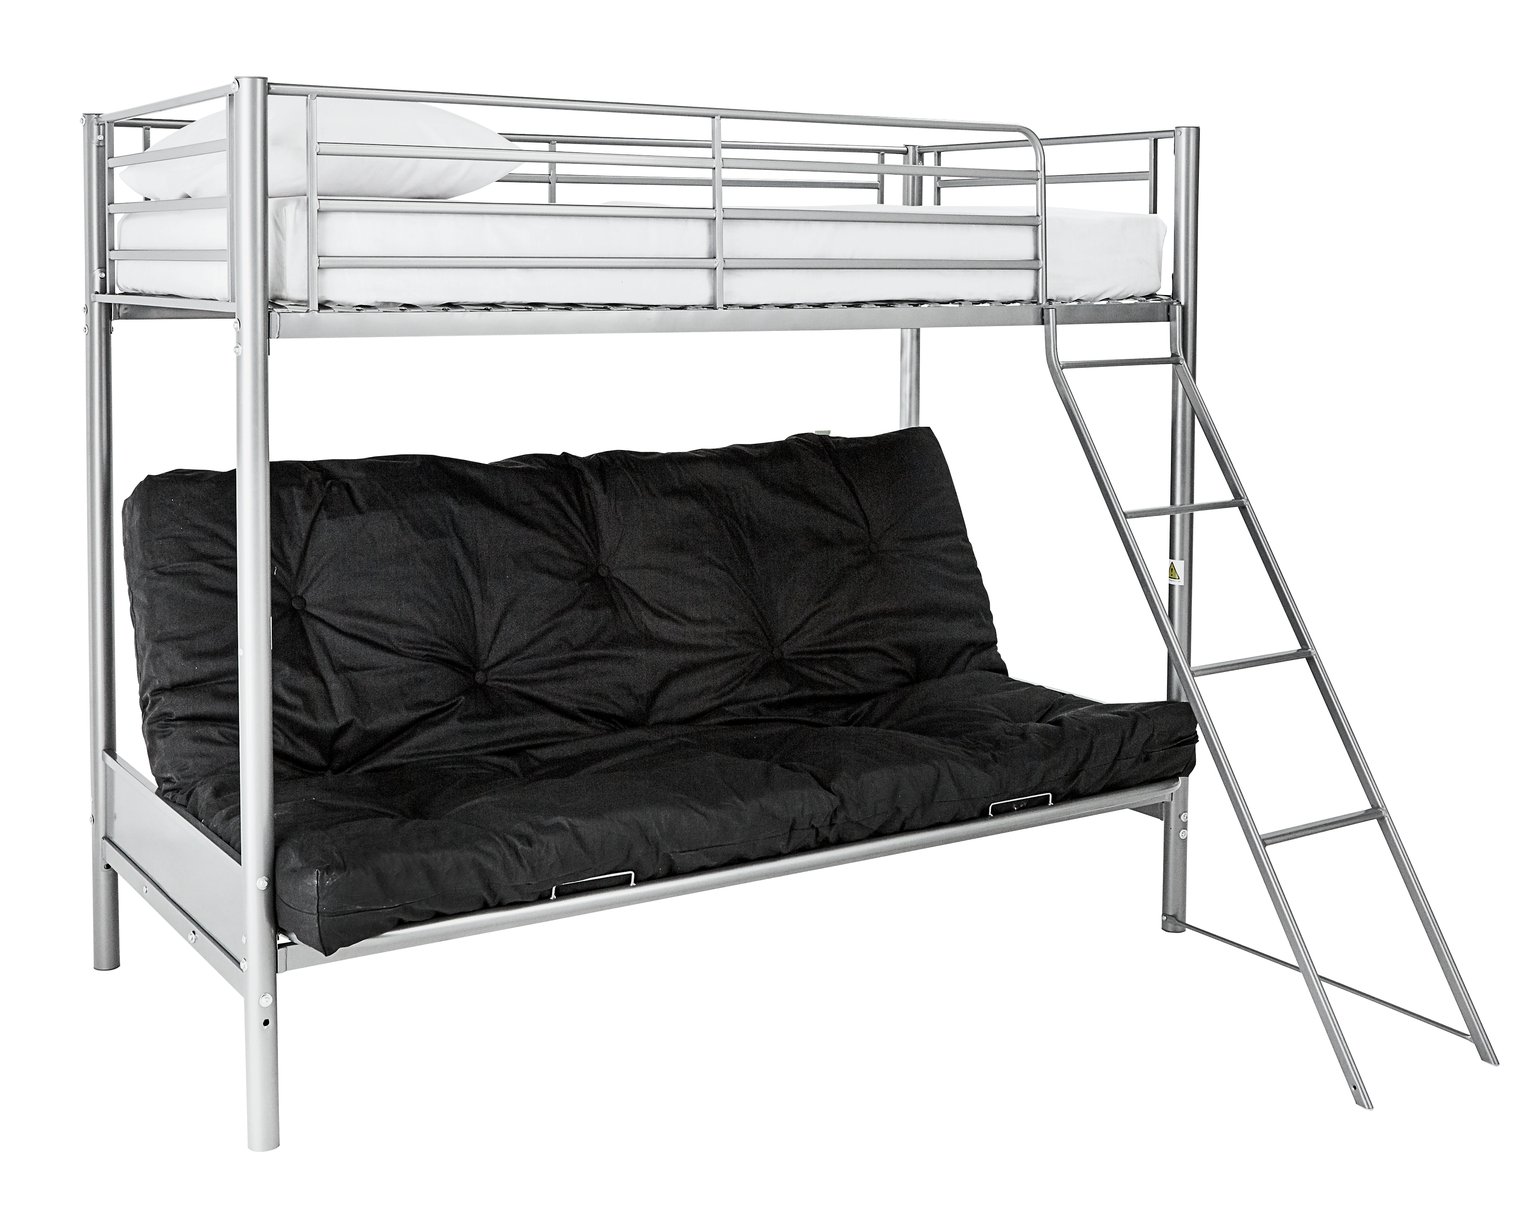 metal bunk bed frame